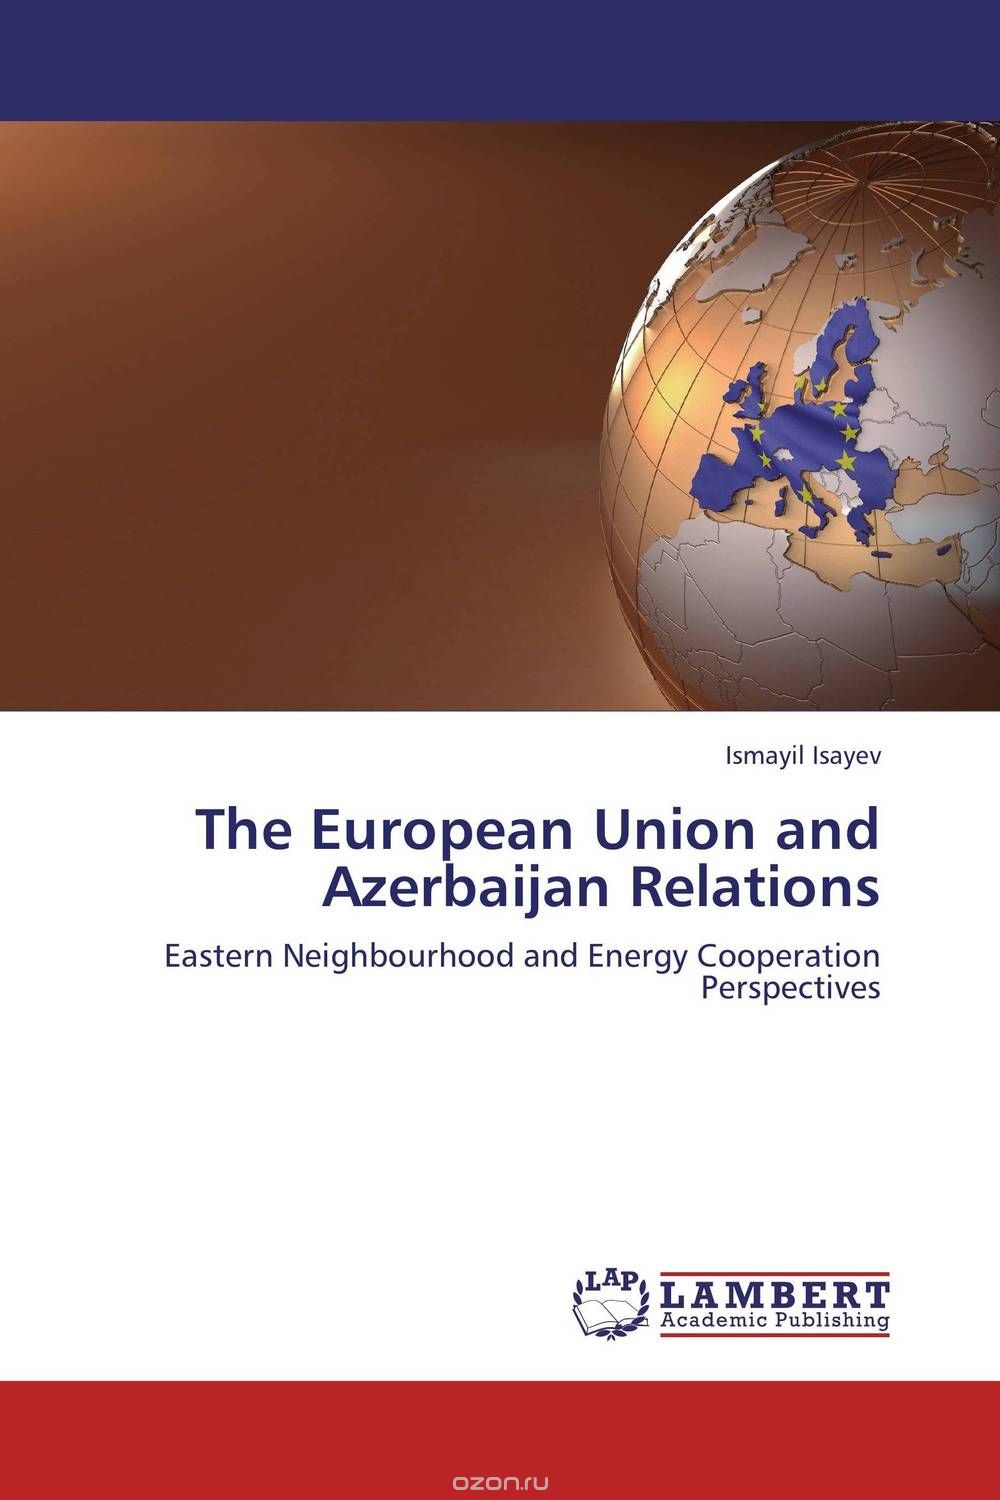 Скачать книгу "The European Union and Azerbaijan Relations"